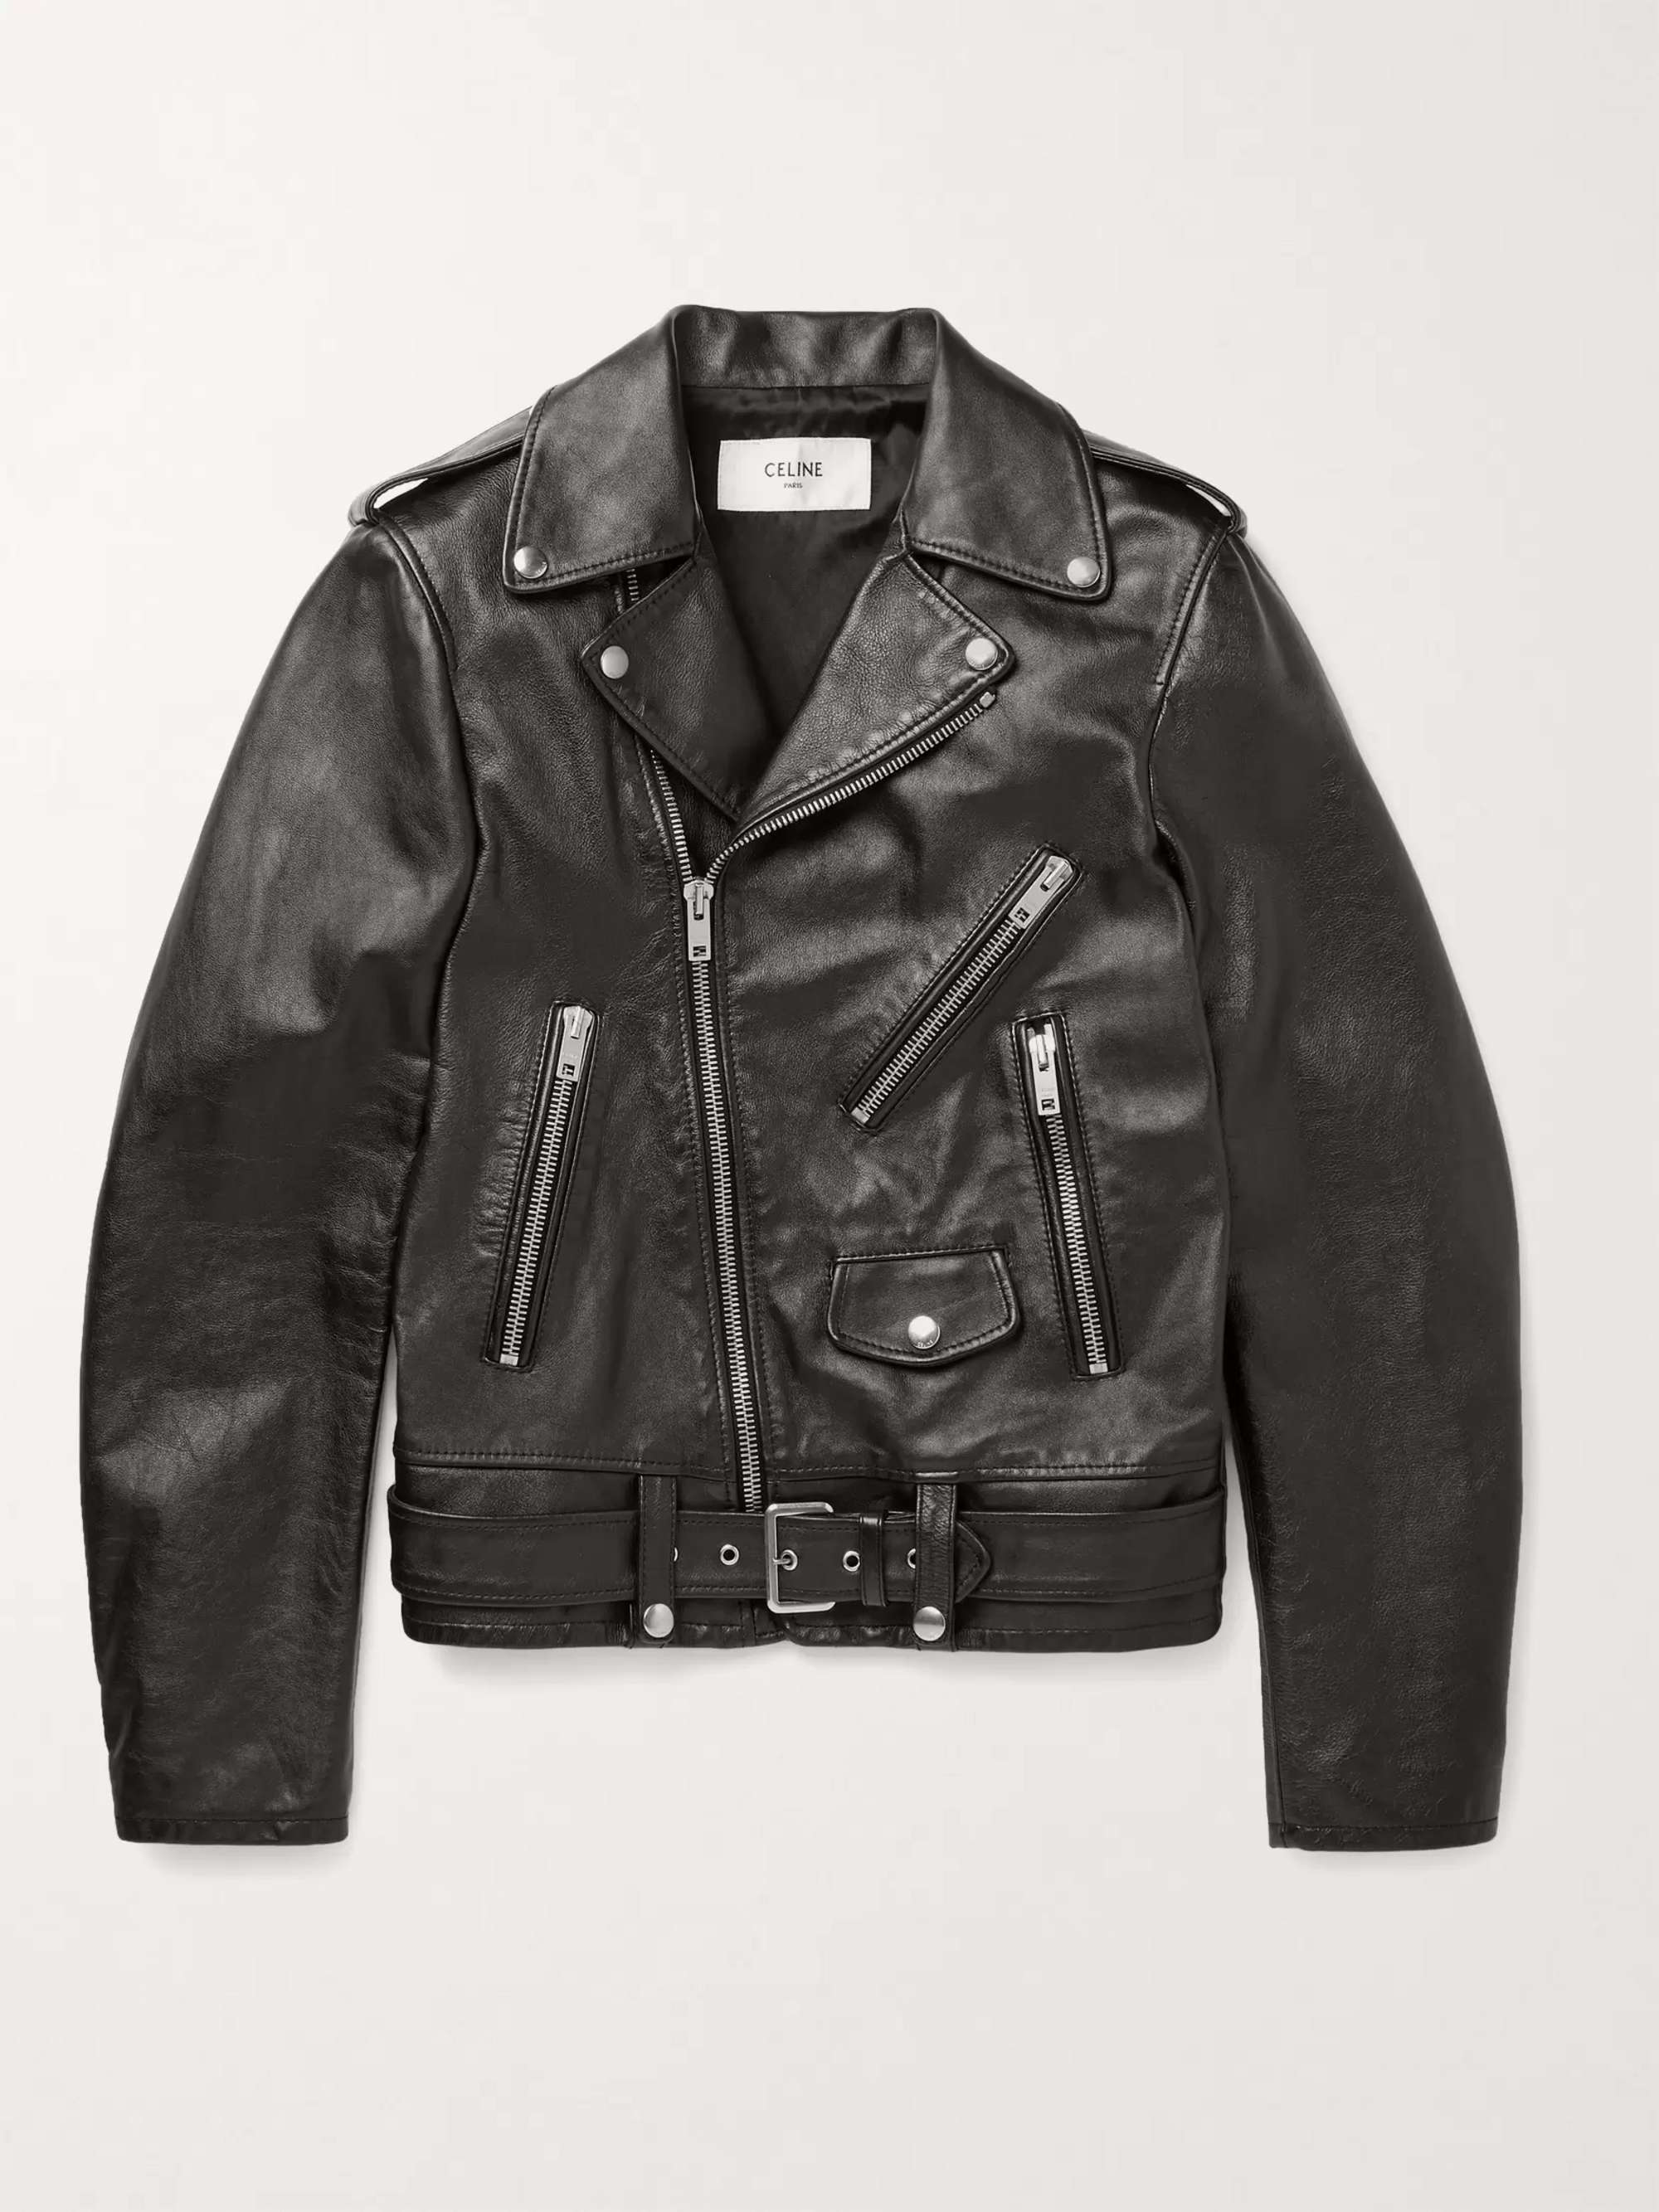 CELINE HOMME Leather Jacket